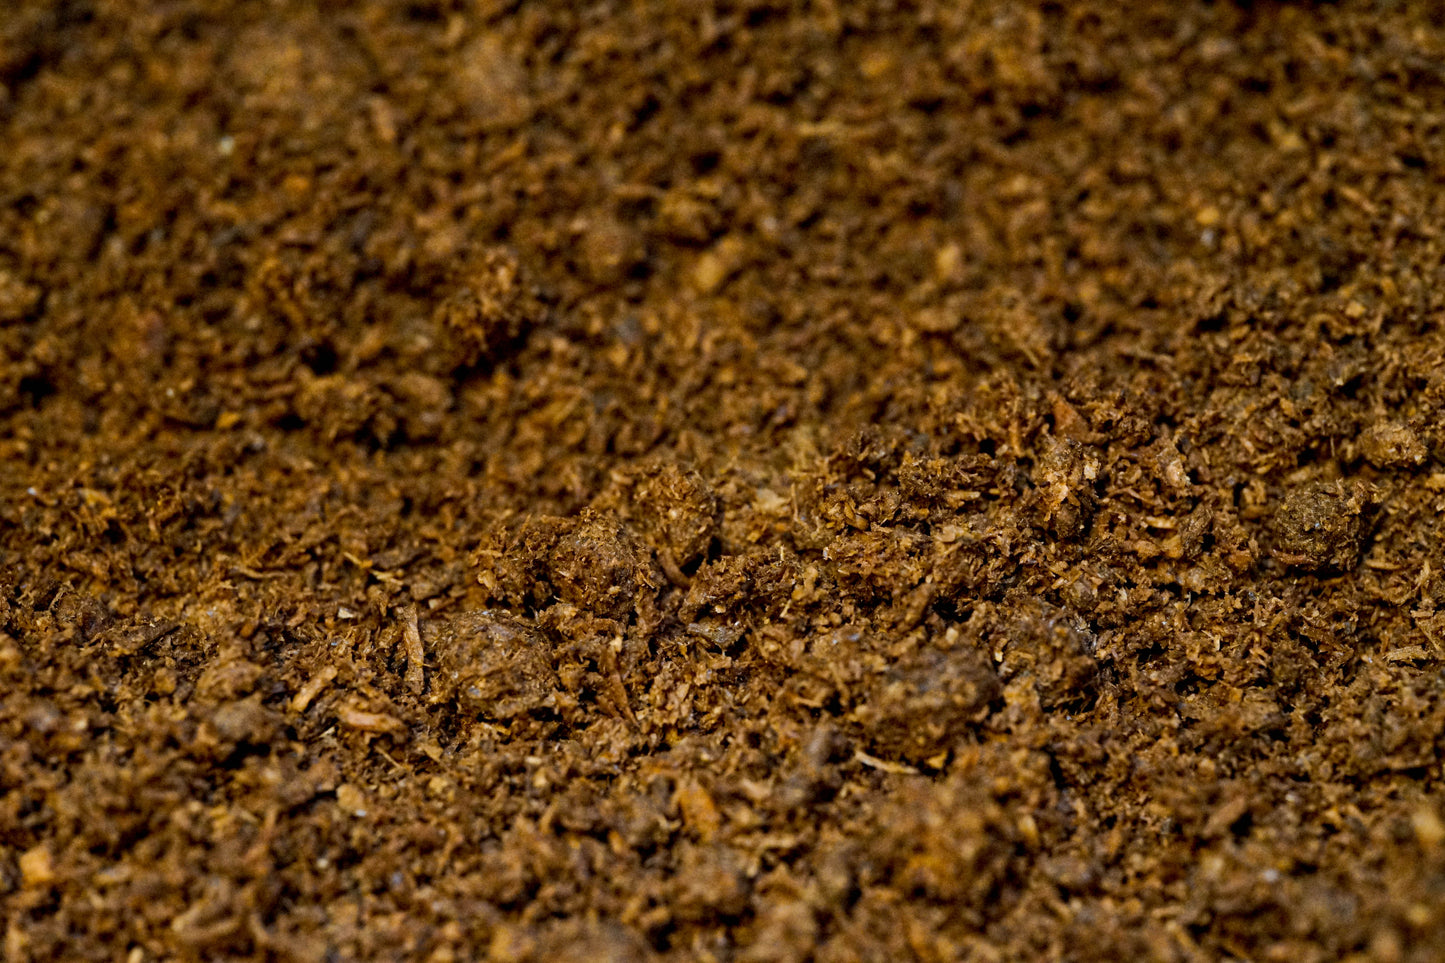 Stag beetle flake soil